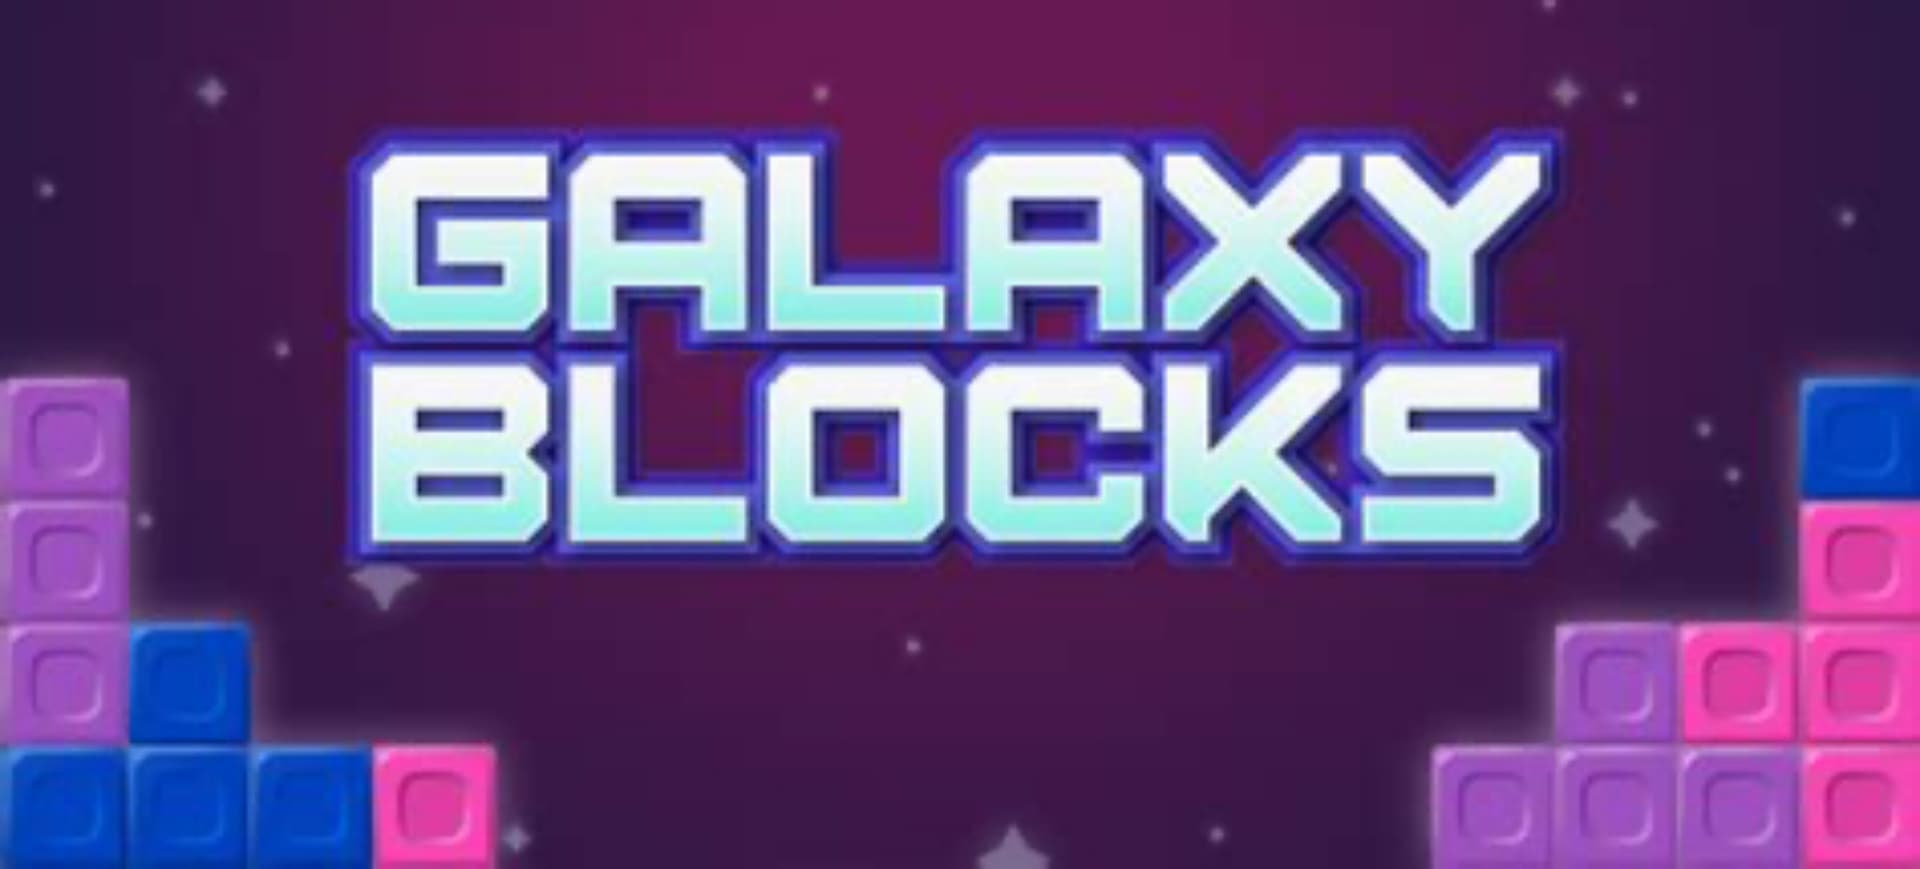 Galaxy blocks games blockchain